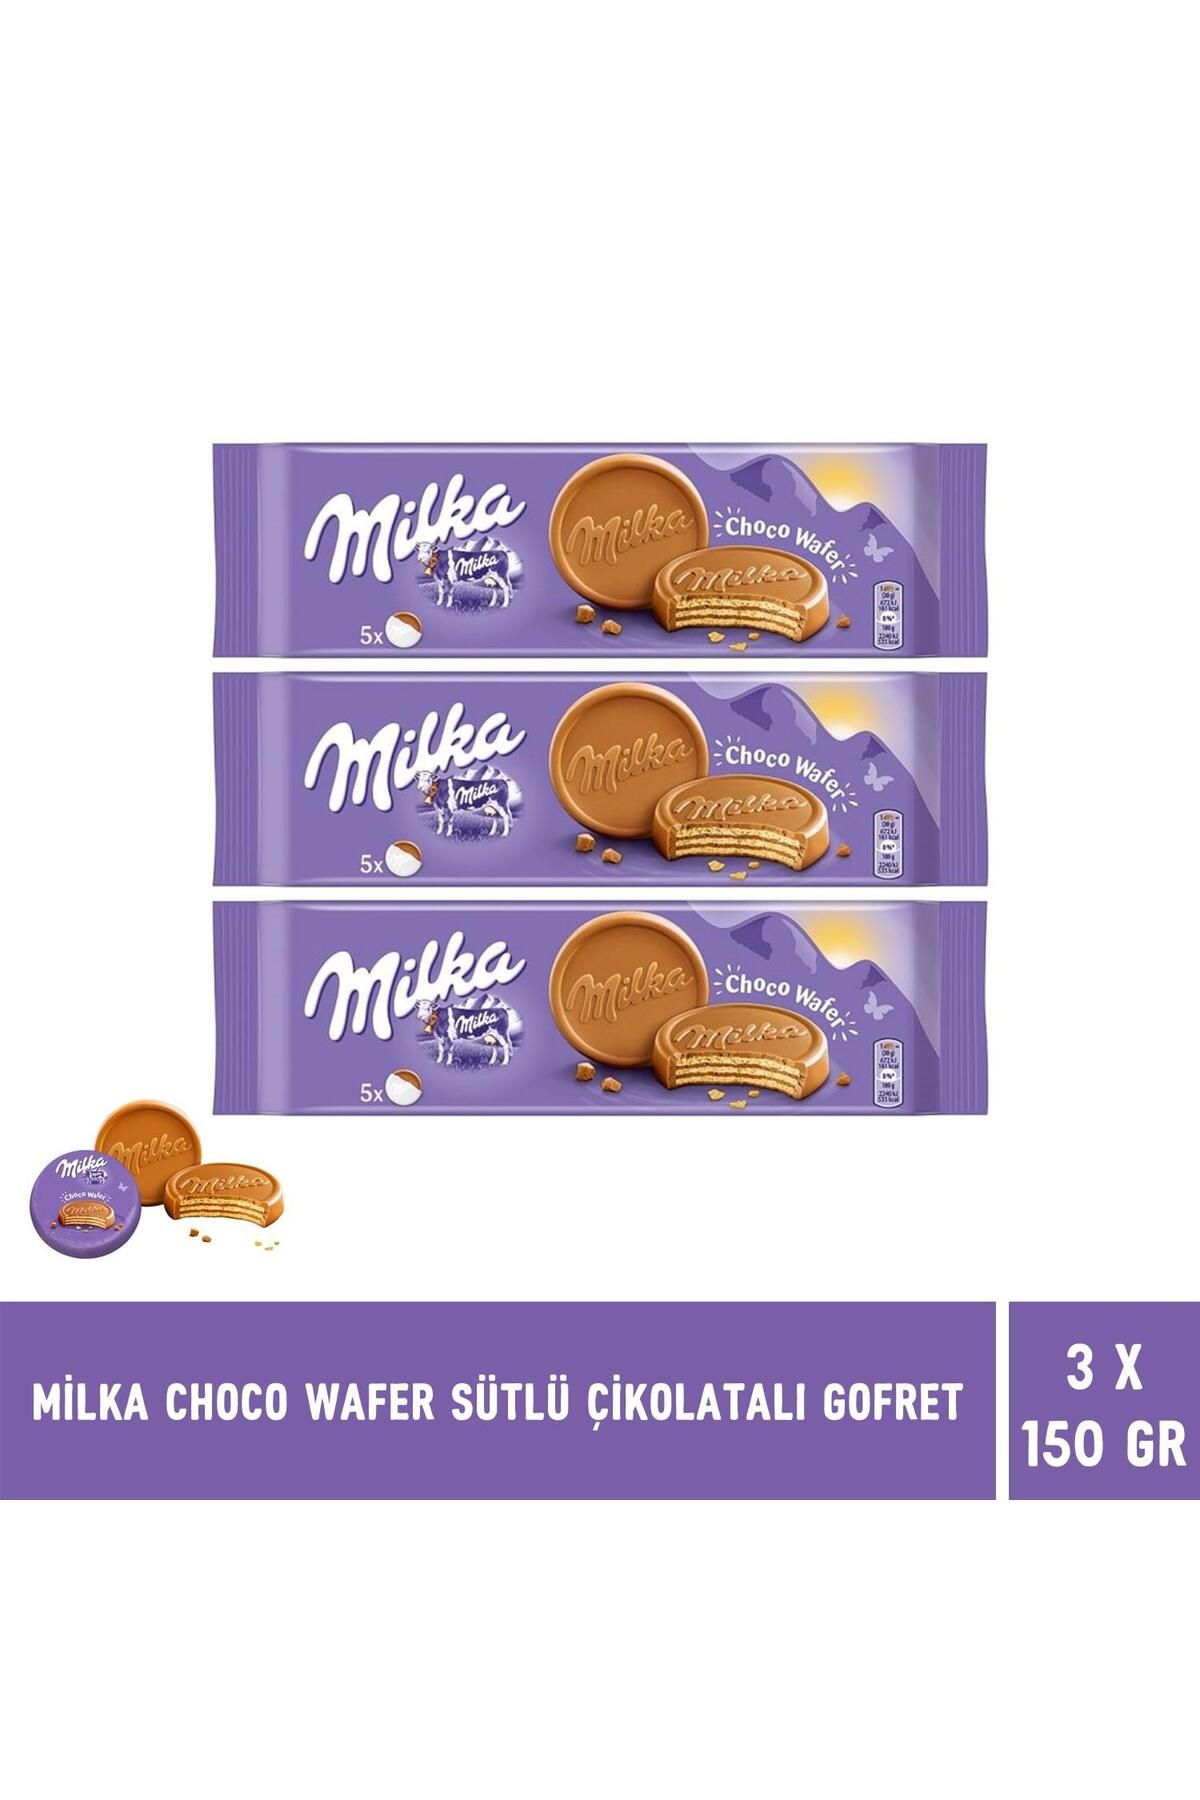 Milka Choco Wafer Sütlü Çikolata Kaplamalı Gofret 150 gr - 3 Adet